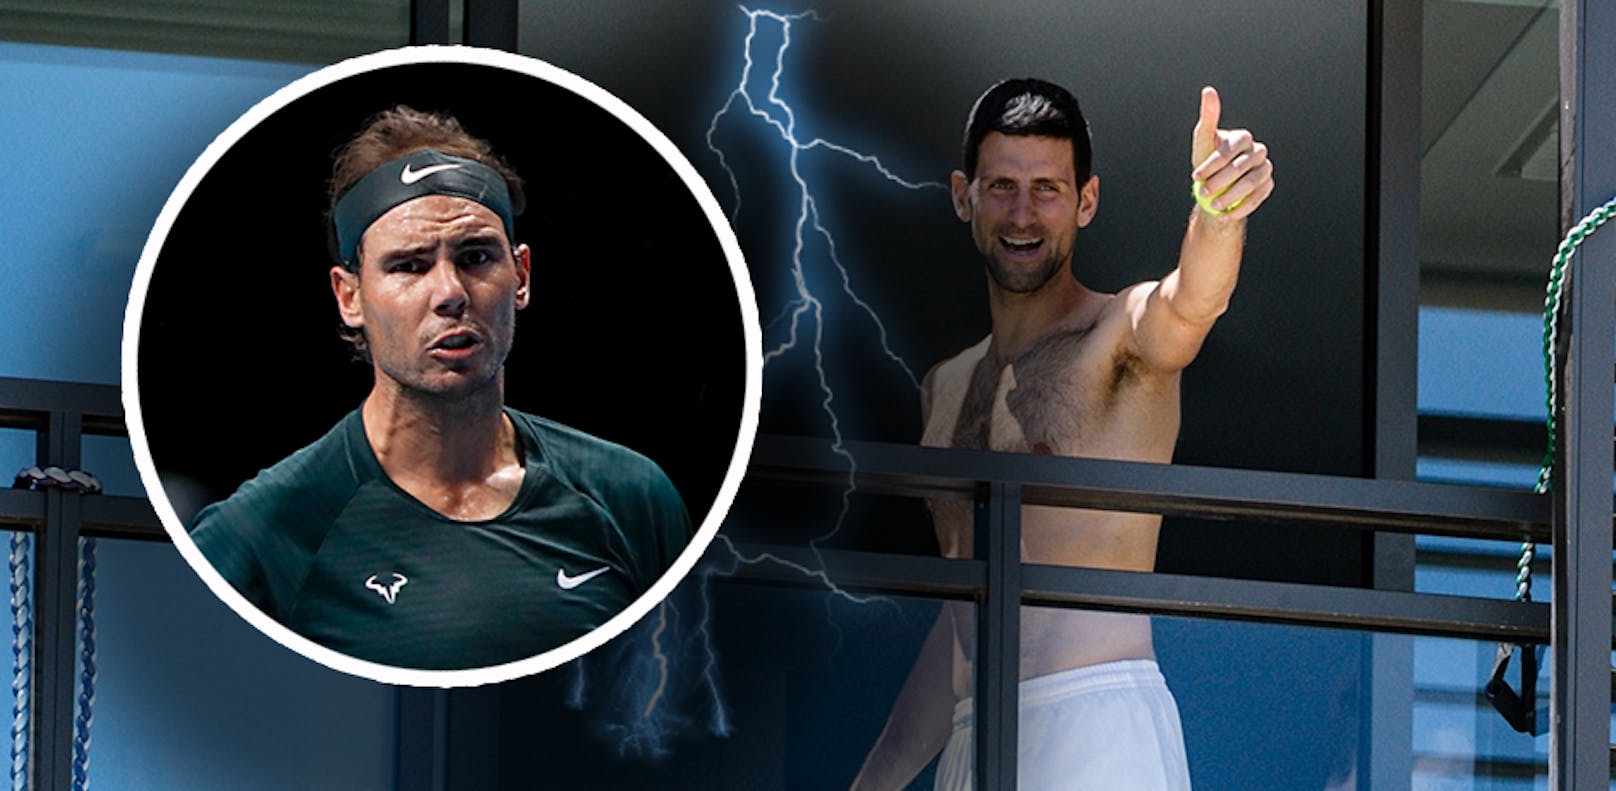 Rafael Nadal geht auf Novak Djokovic los. 